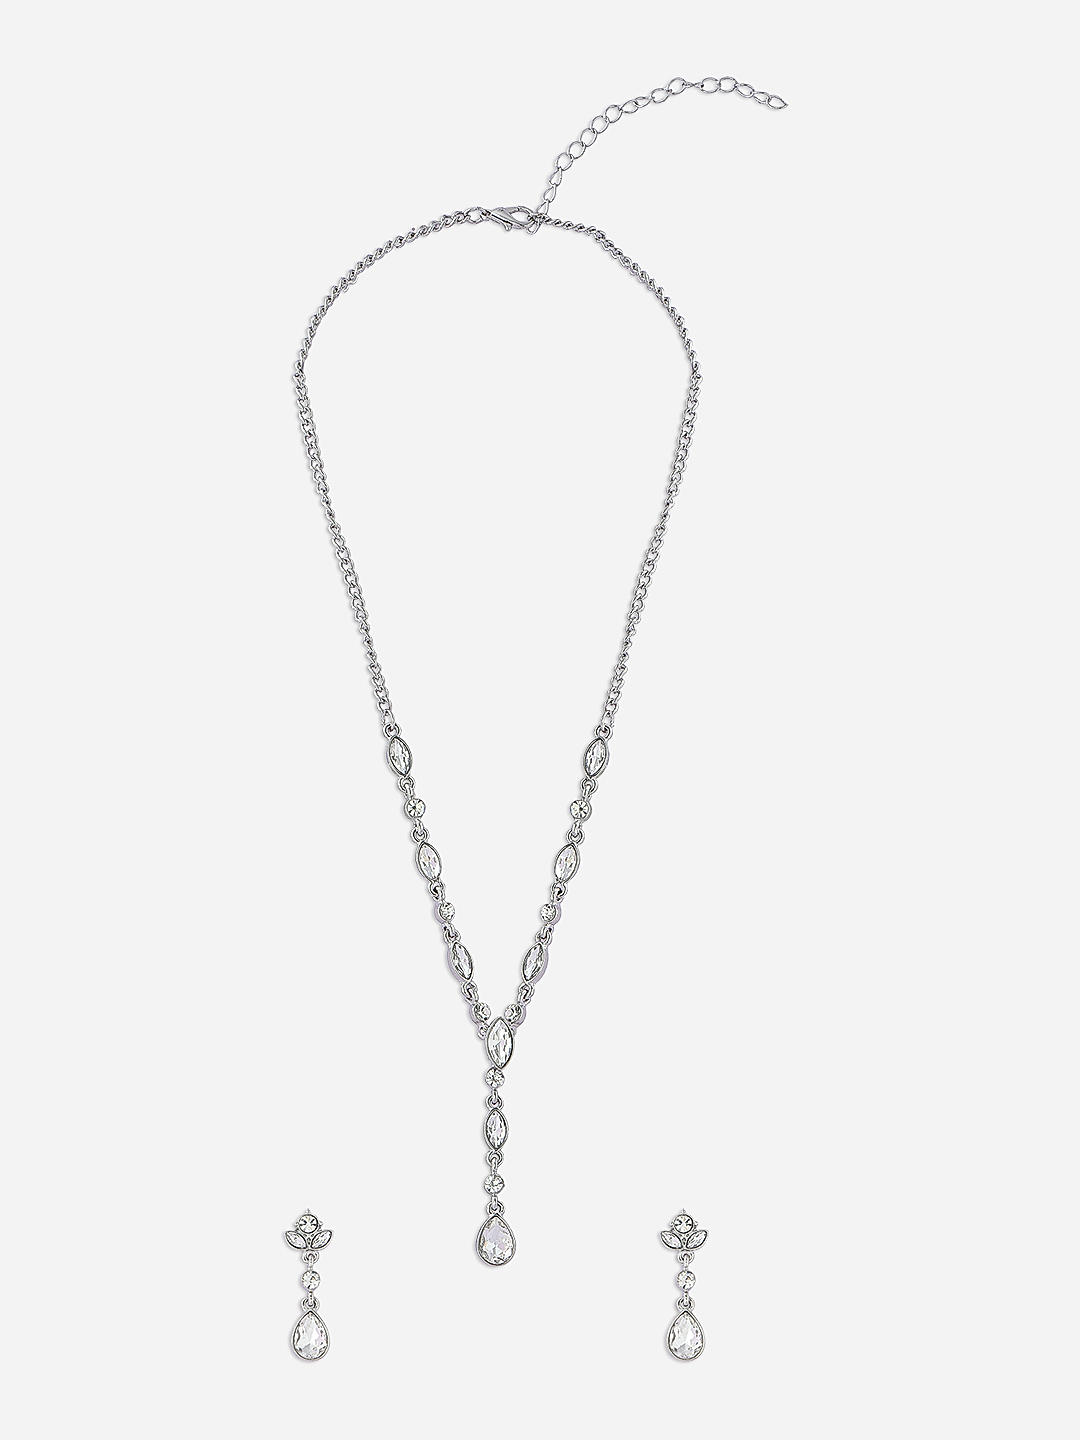 Austrian Rhinestone Inlaid Elegant Round Pendant 18K Platinum Necklace and Earrings  Set